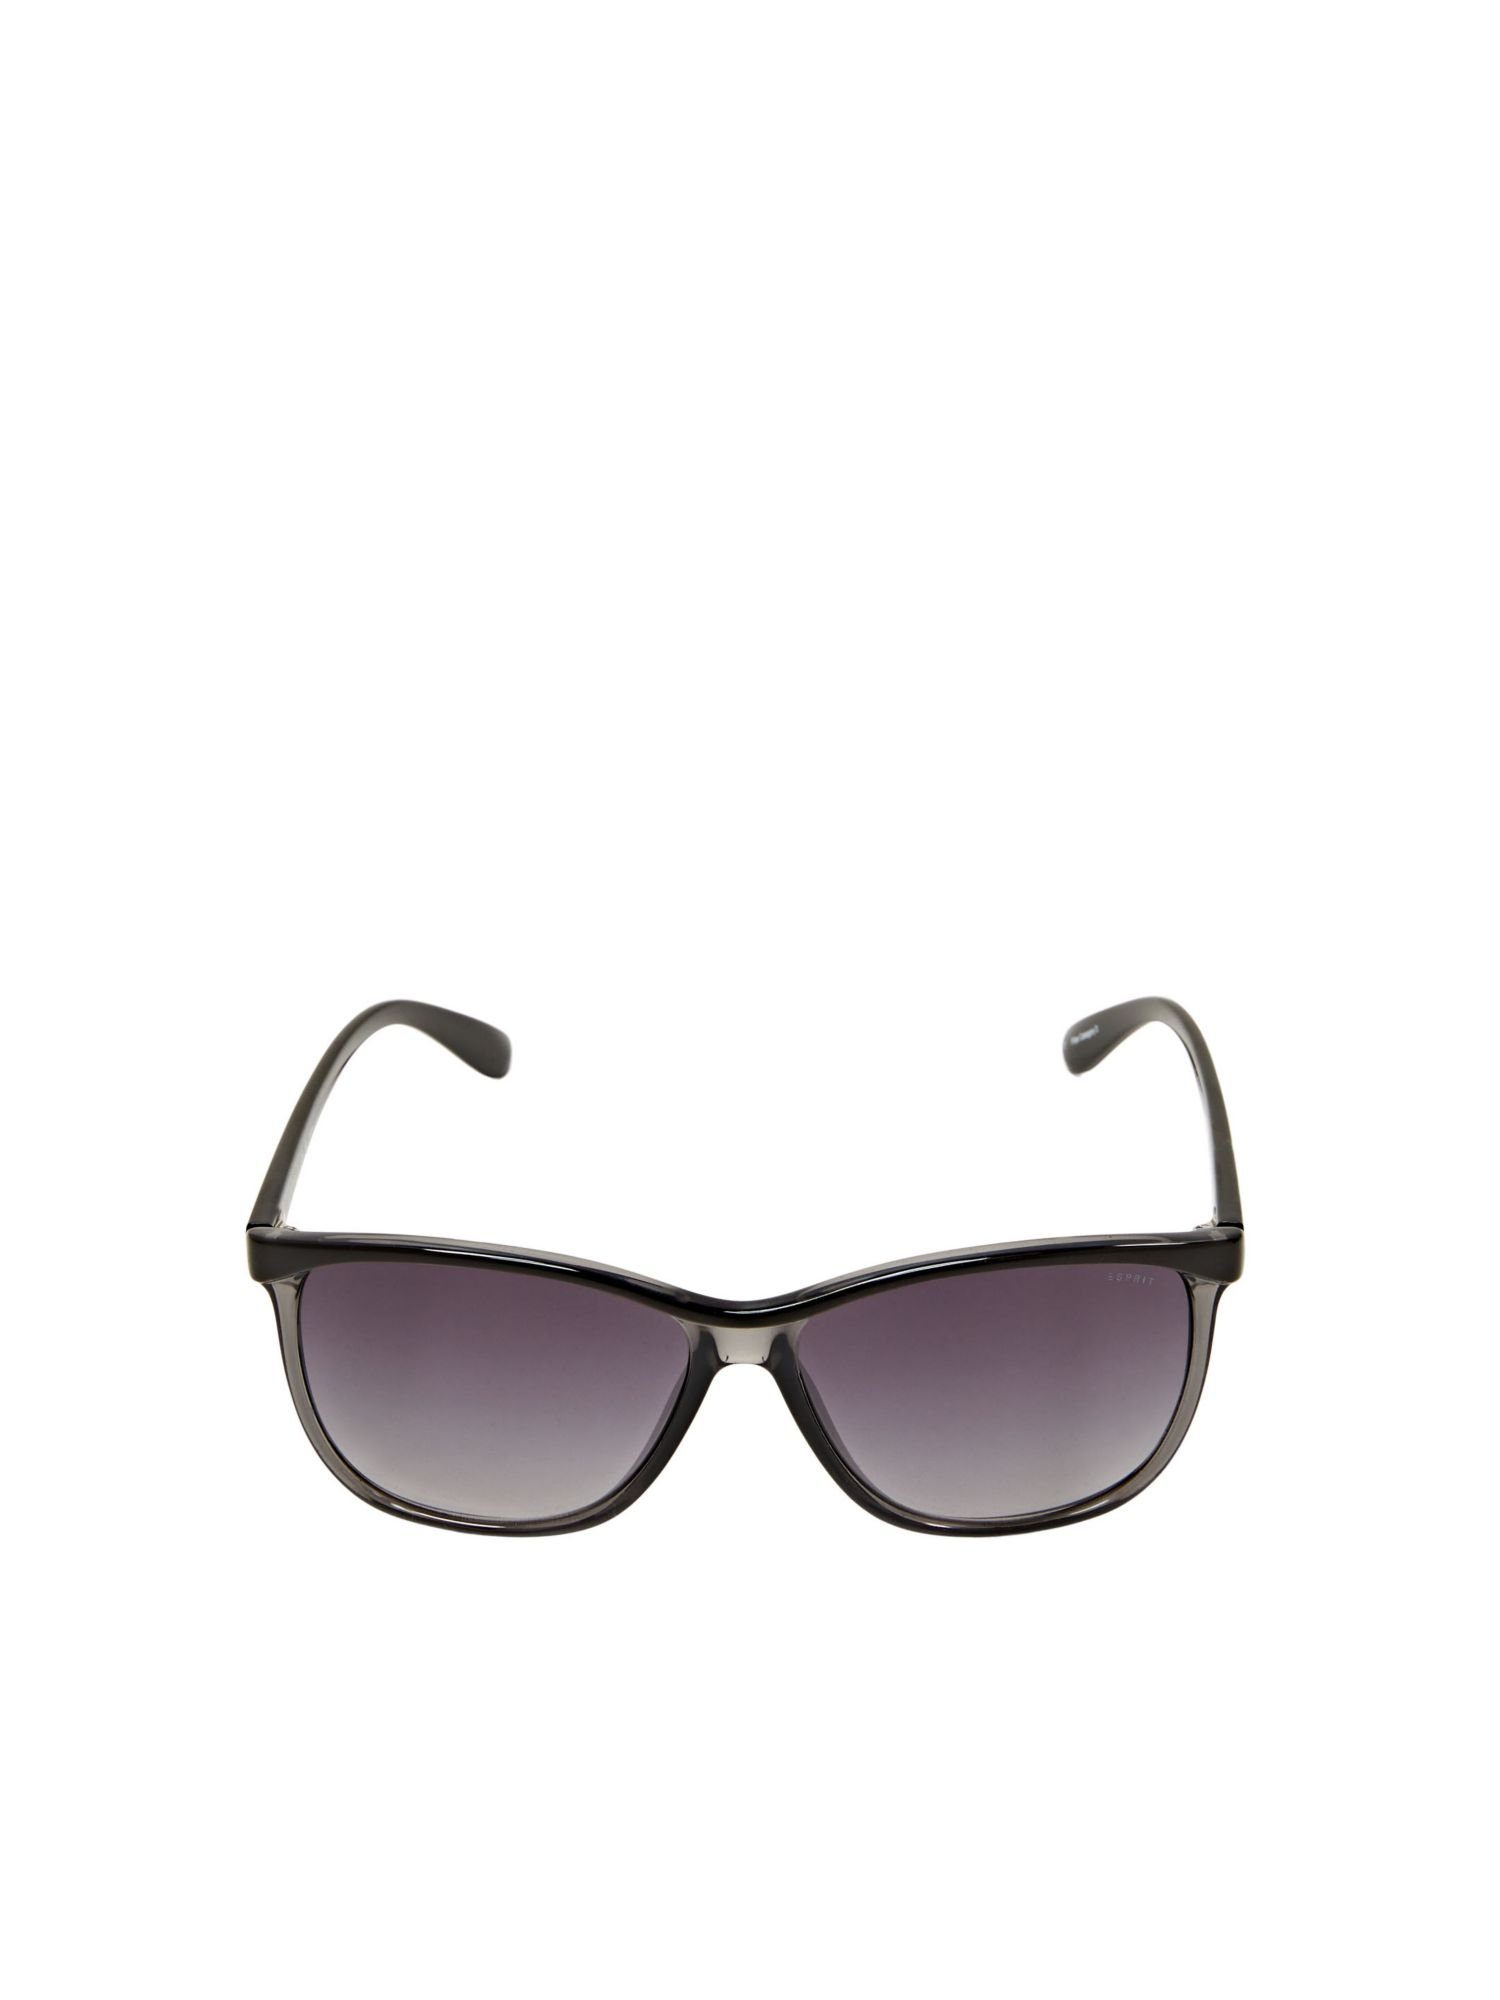 Esprit Sonnenbrille Sonnenbrille mit semitransparentem Rahmen GREY